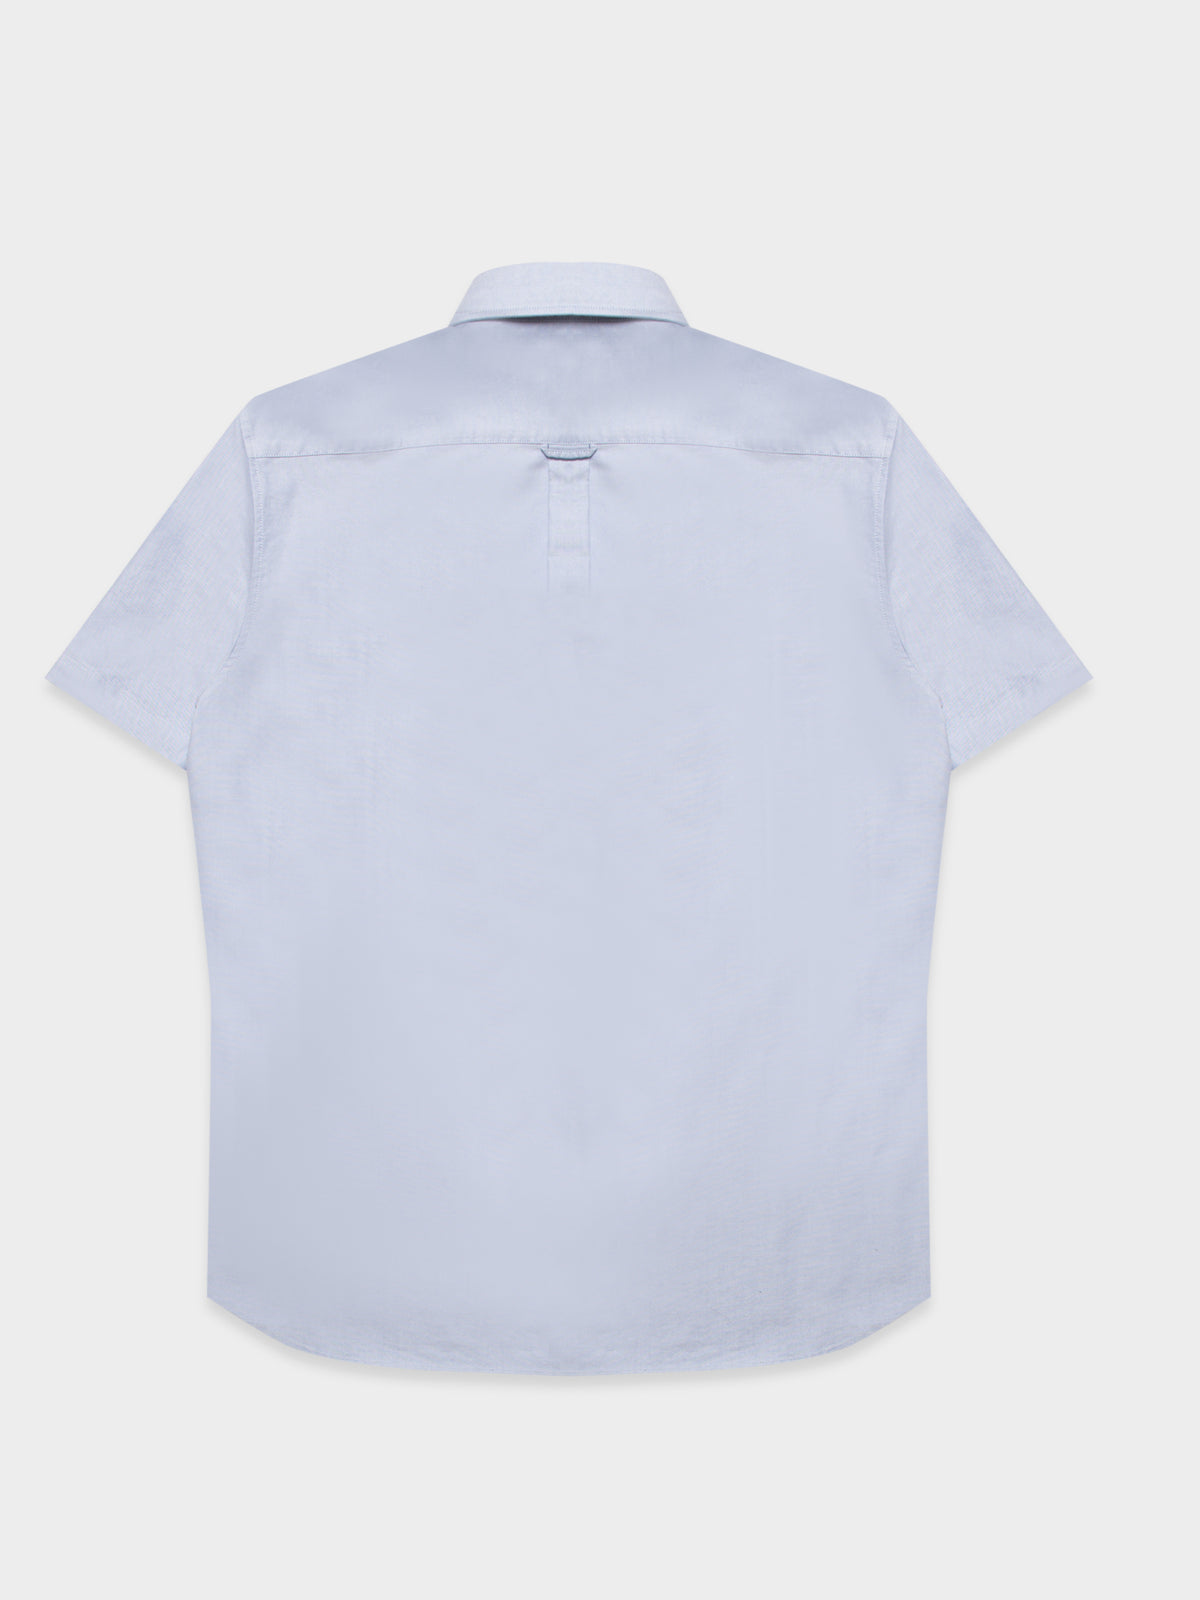 Short Sleeve Oxford Shirt in Blue